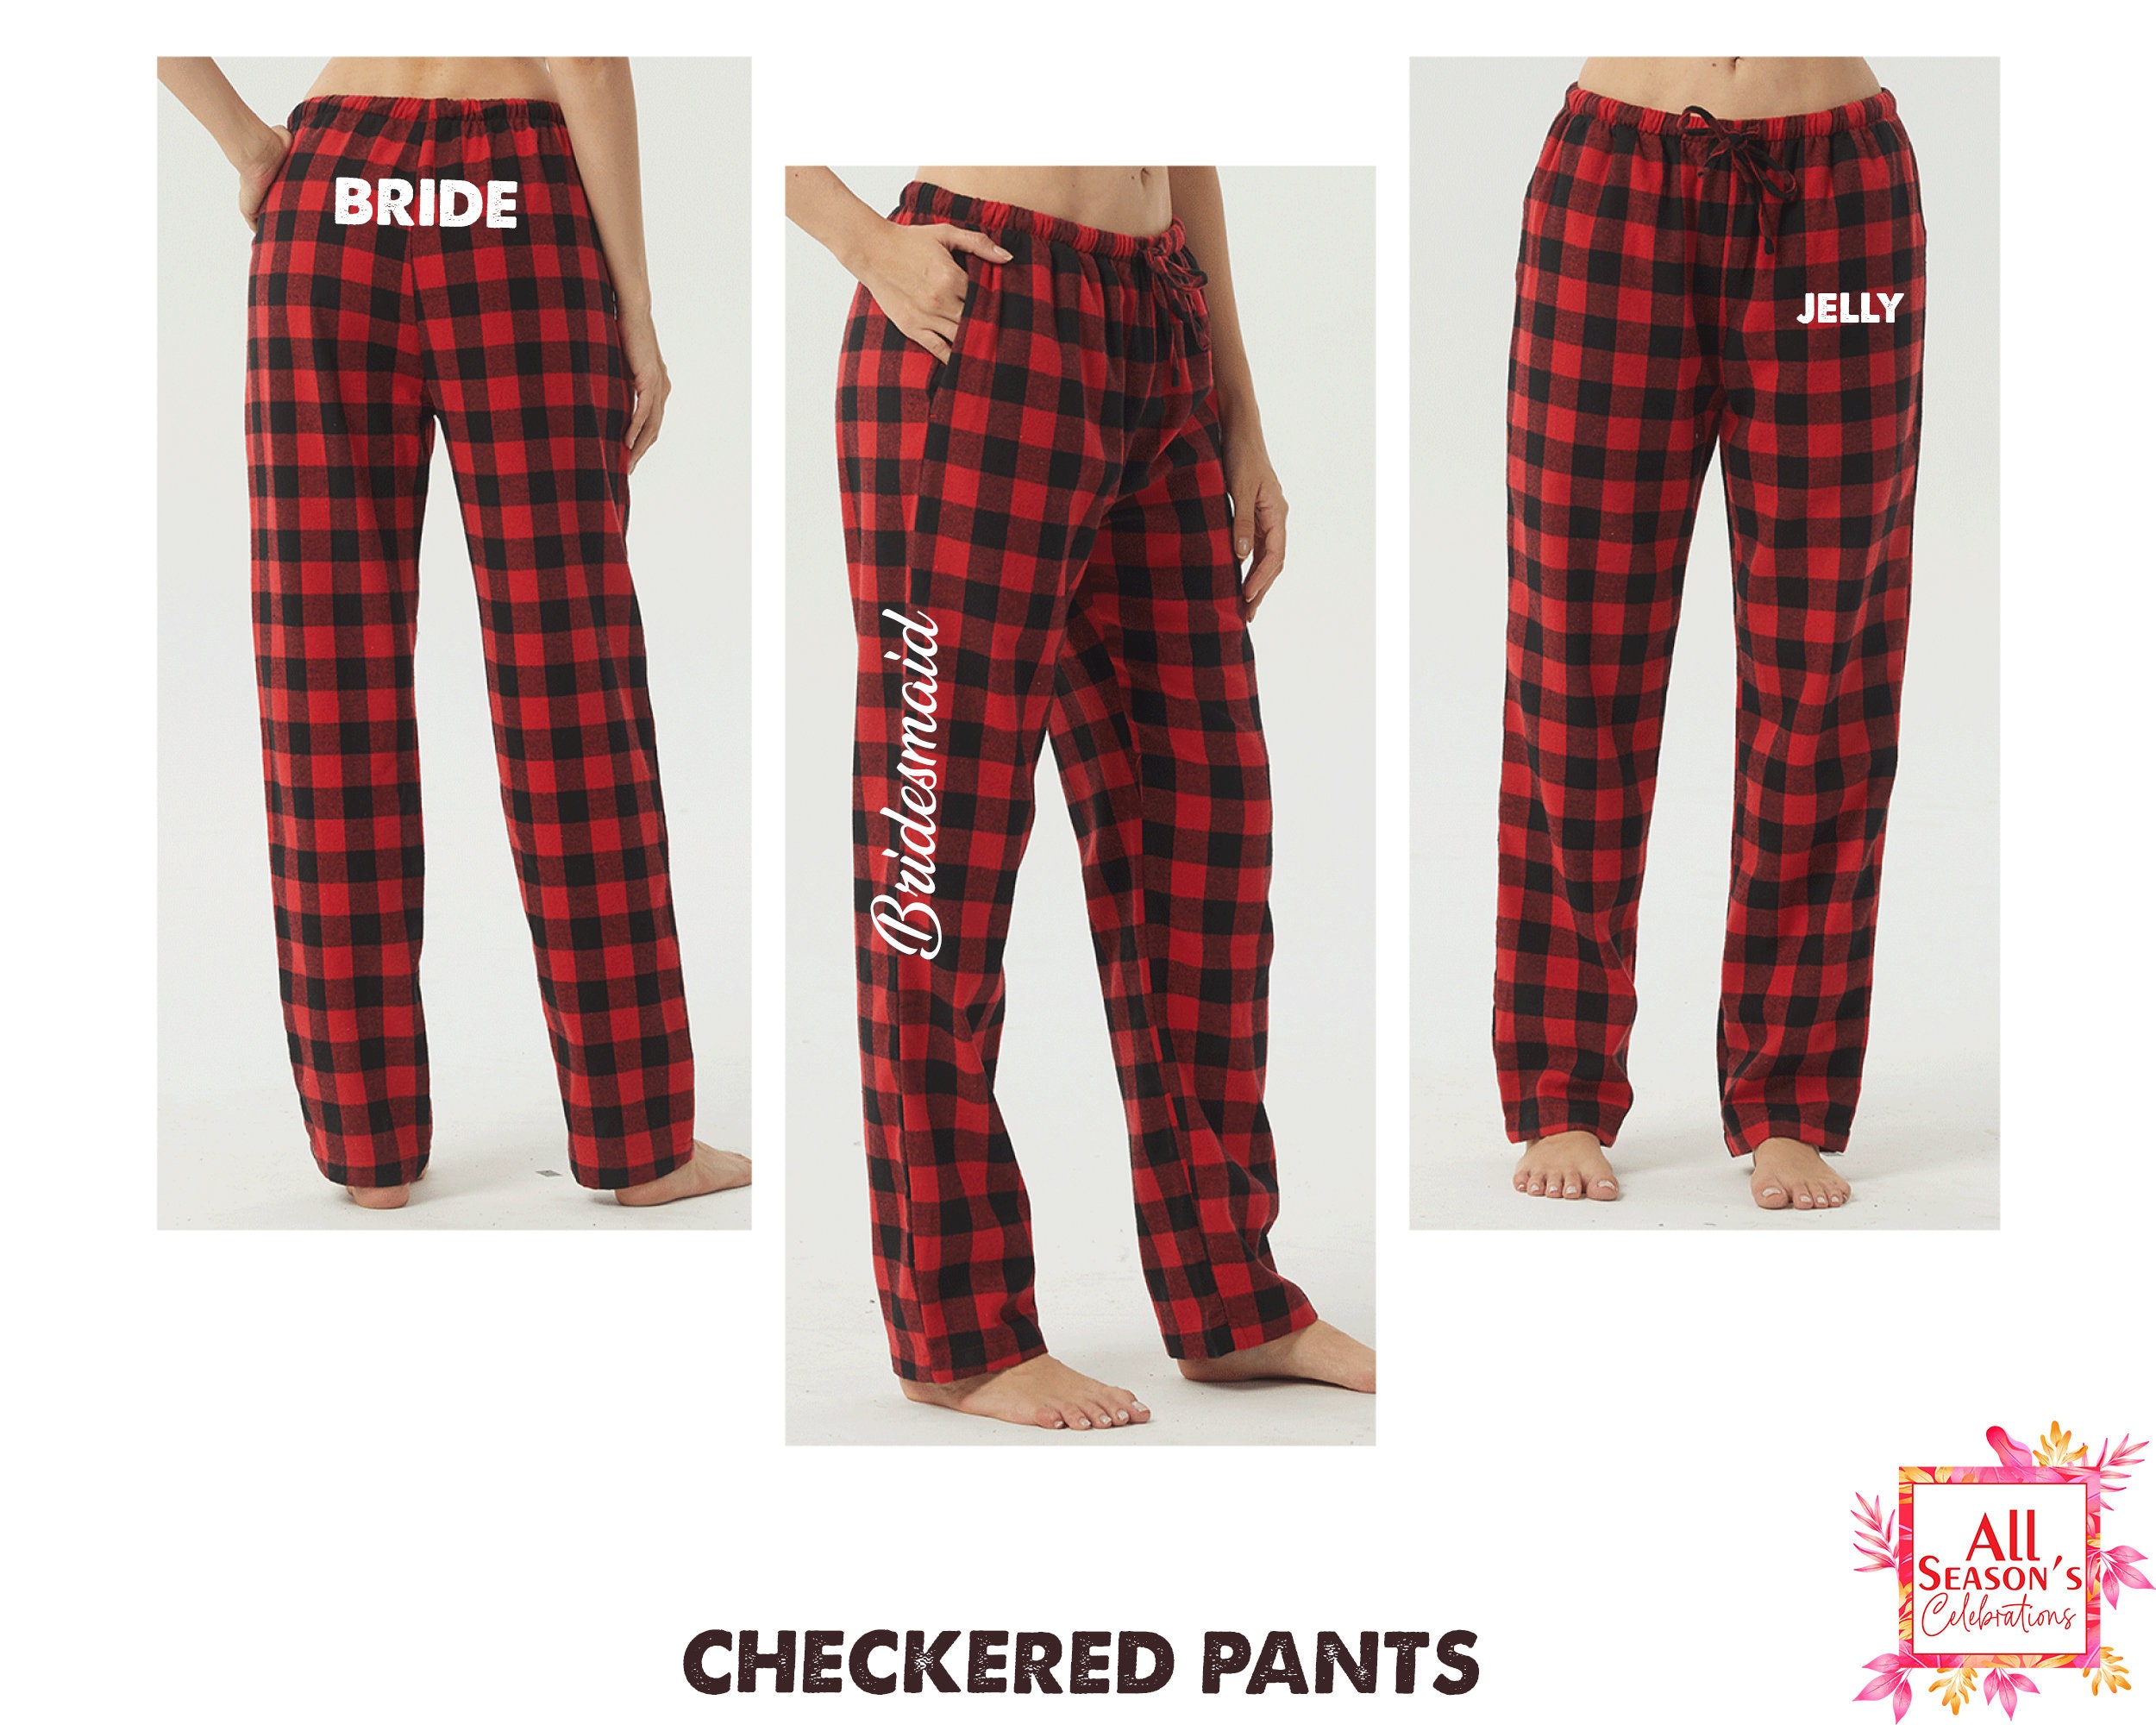 Black and red square pajama pants